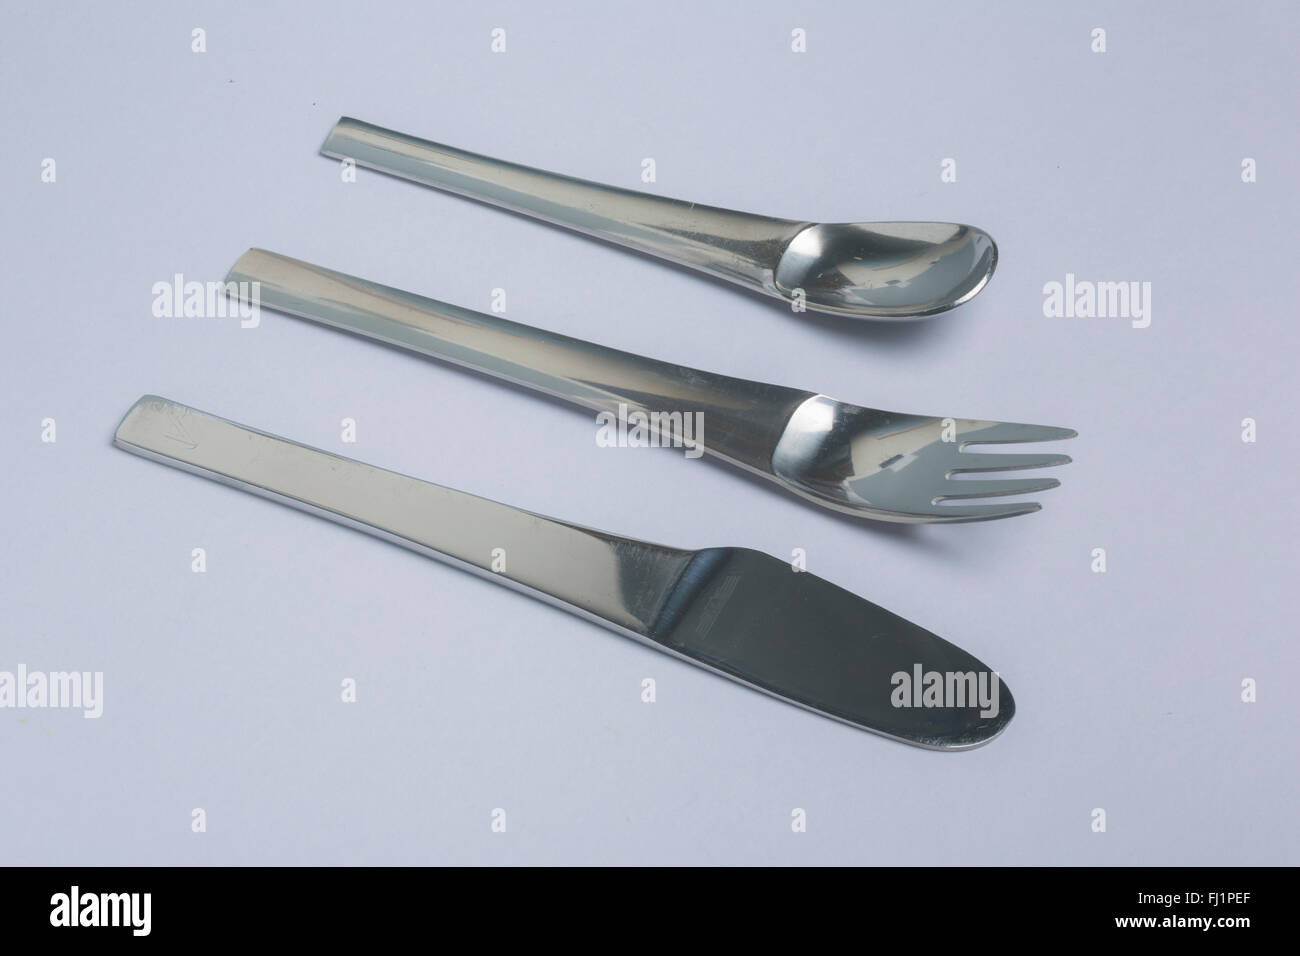 Joe Colombo 'Linea 72' First Class cutlery for Alitalia, 1970 Stock Photo